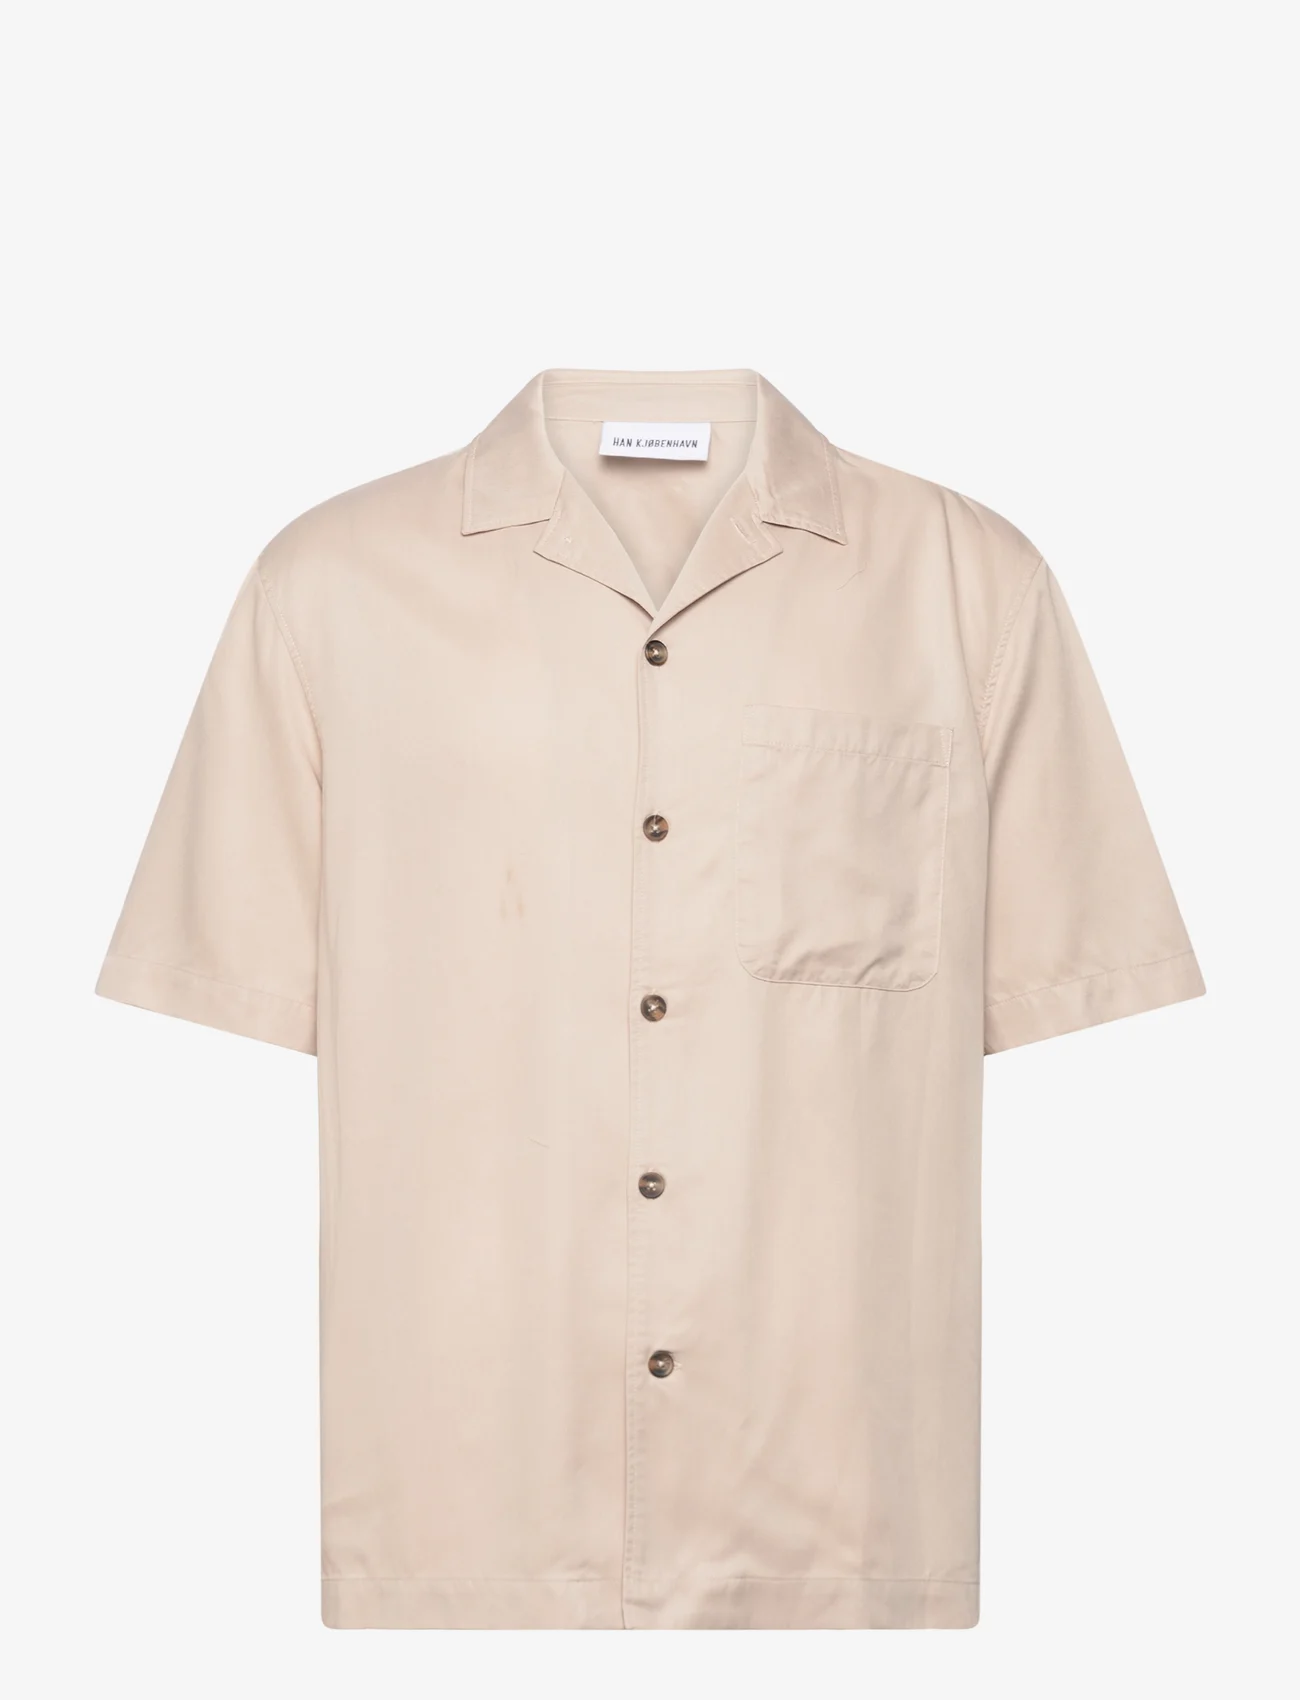 HAN Kjøbenhavn - Tencel Summer Shirt - marškinėliai trumpomis rankovėmis - sand - 0